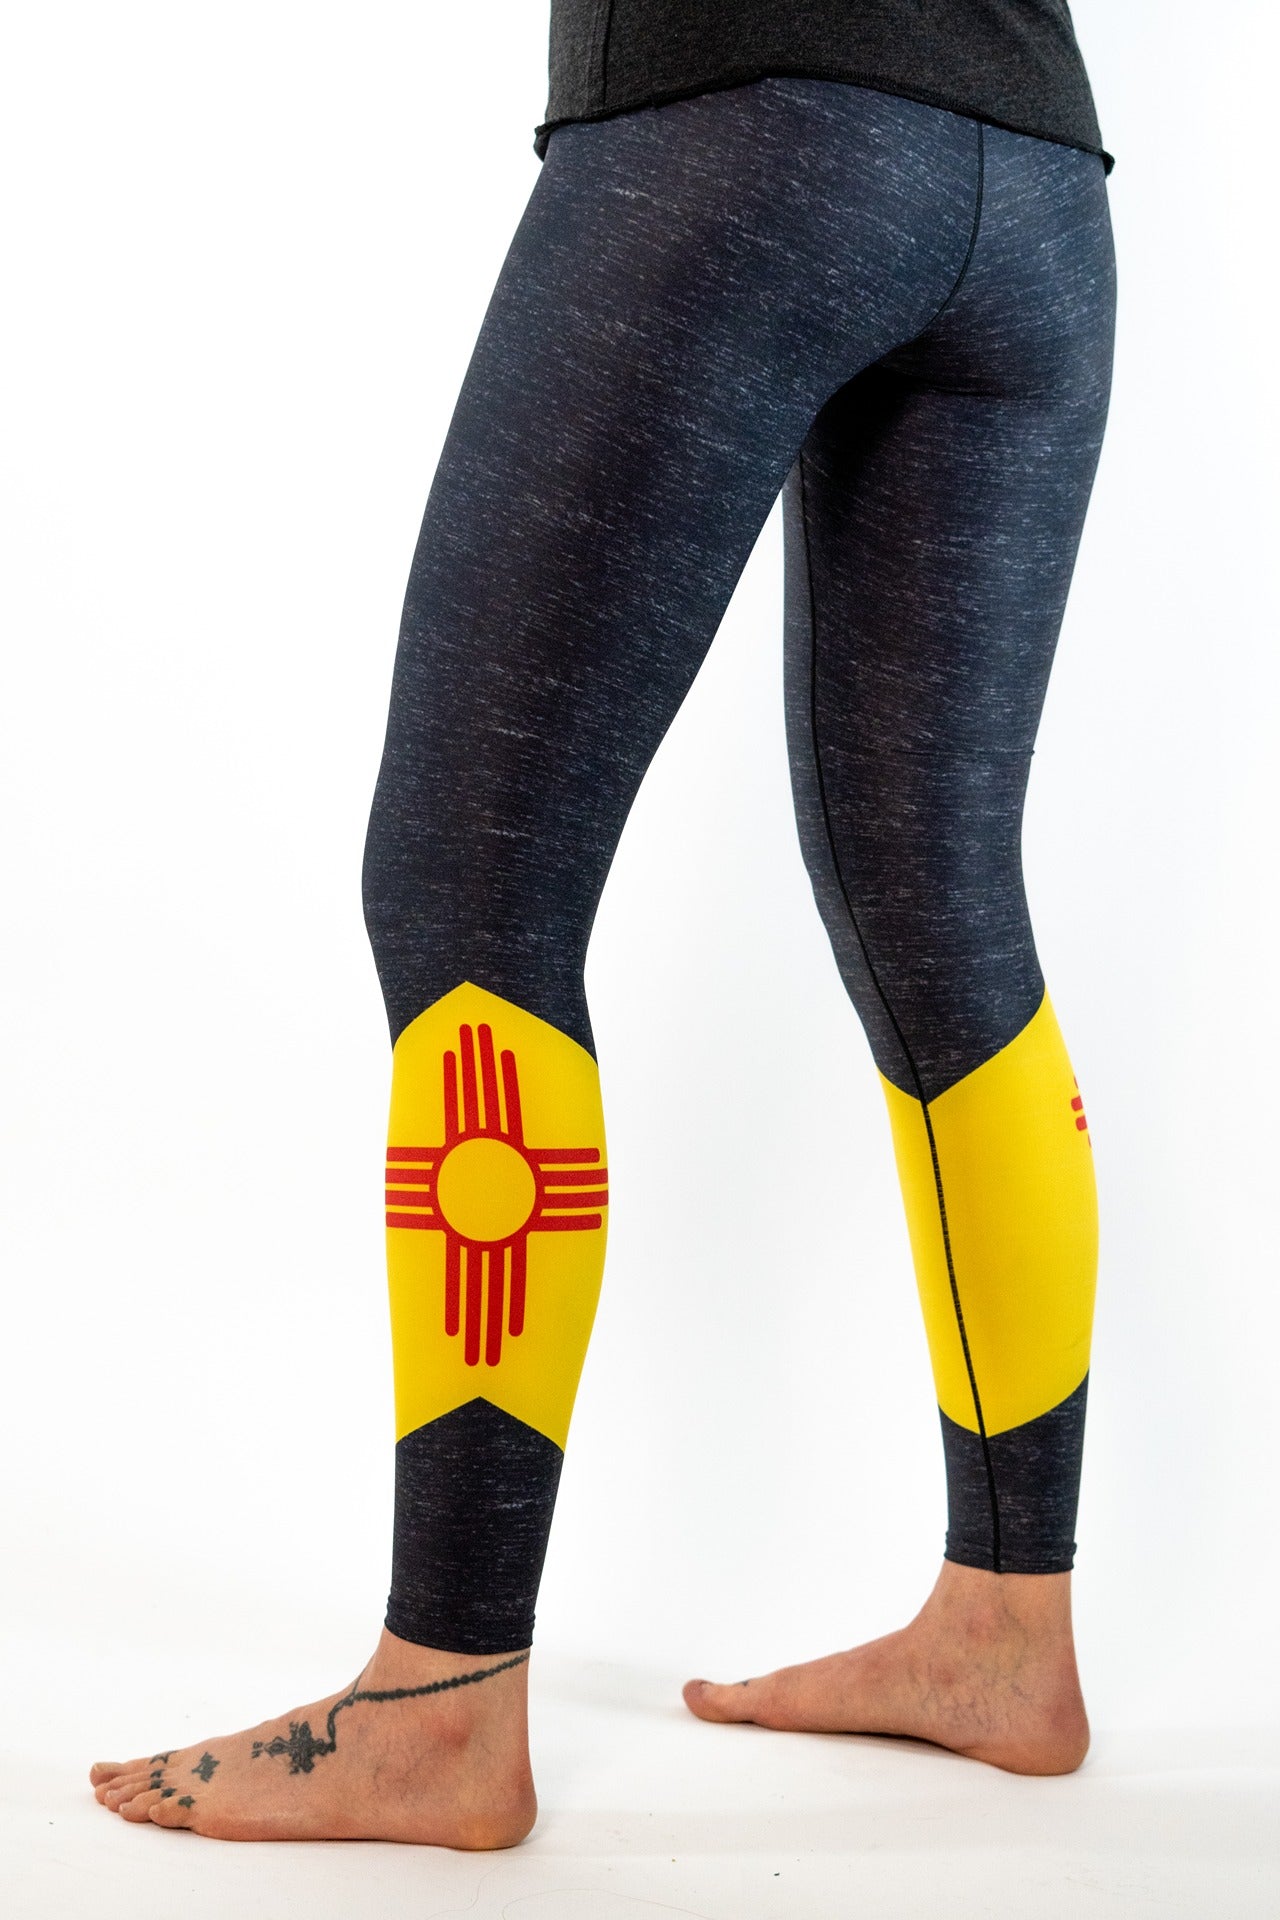 Colorado Threads New Mexico Yoga Pants - Colorado Threads Clothing